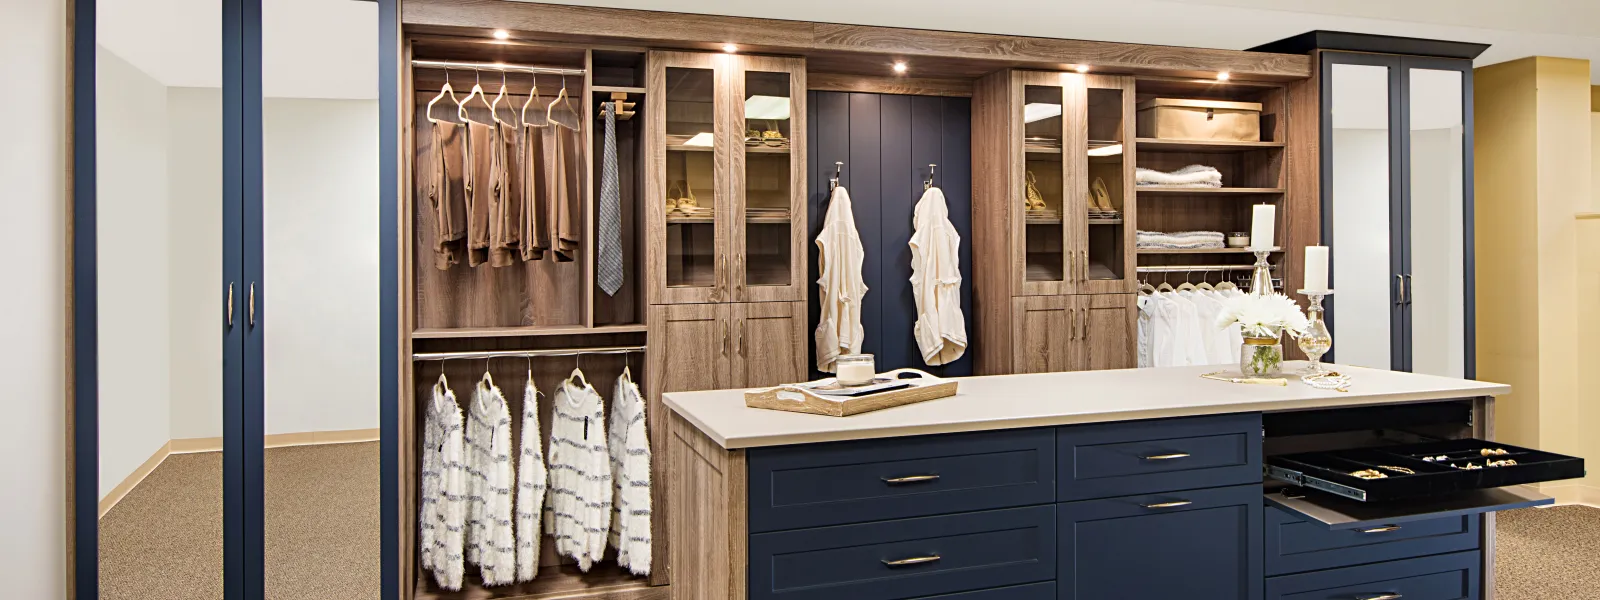 Make the Coat Closet More Functional with Custom Shelves